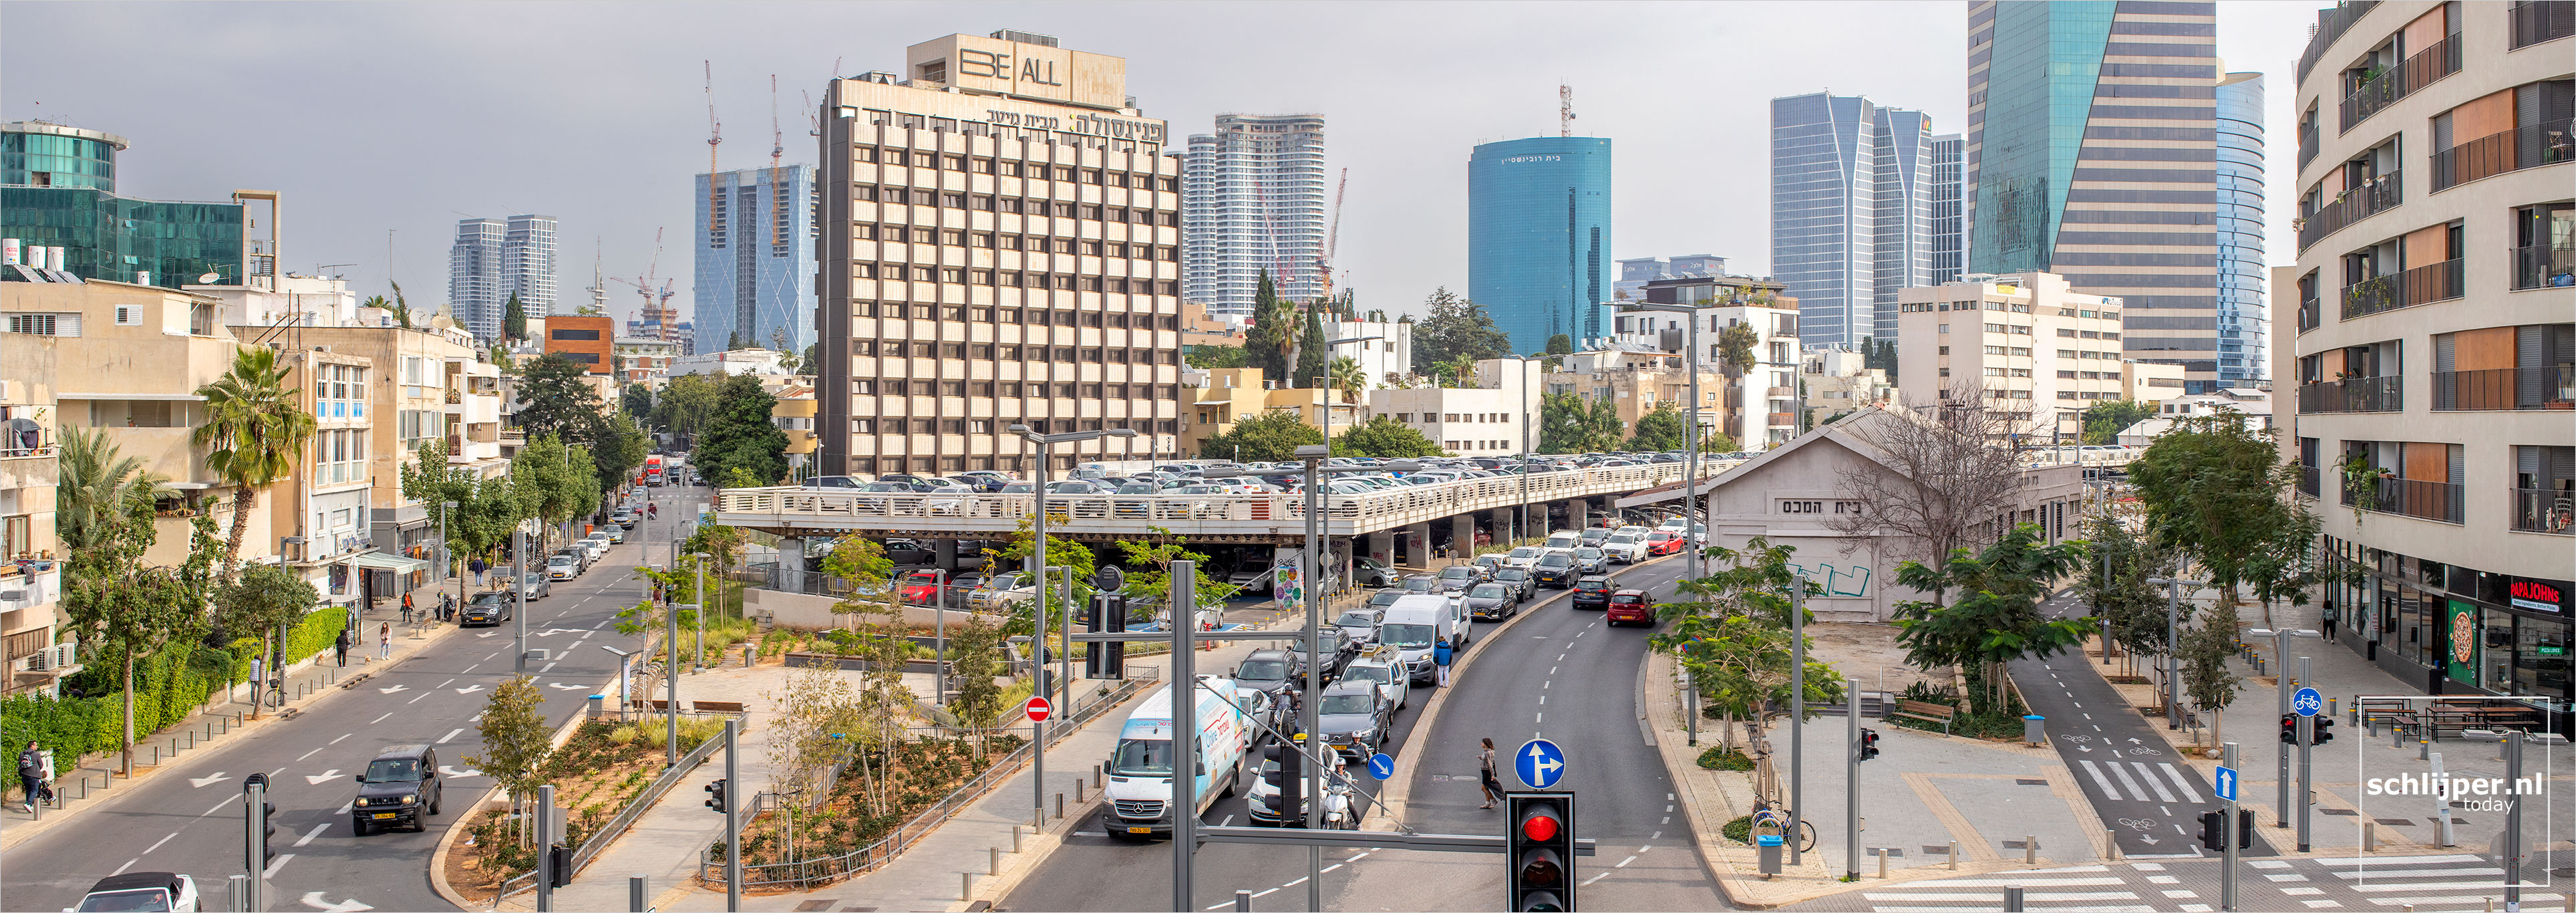 Israel, Tel Aviv, 1 januari 2023